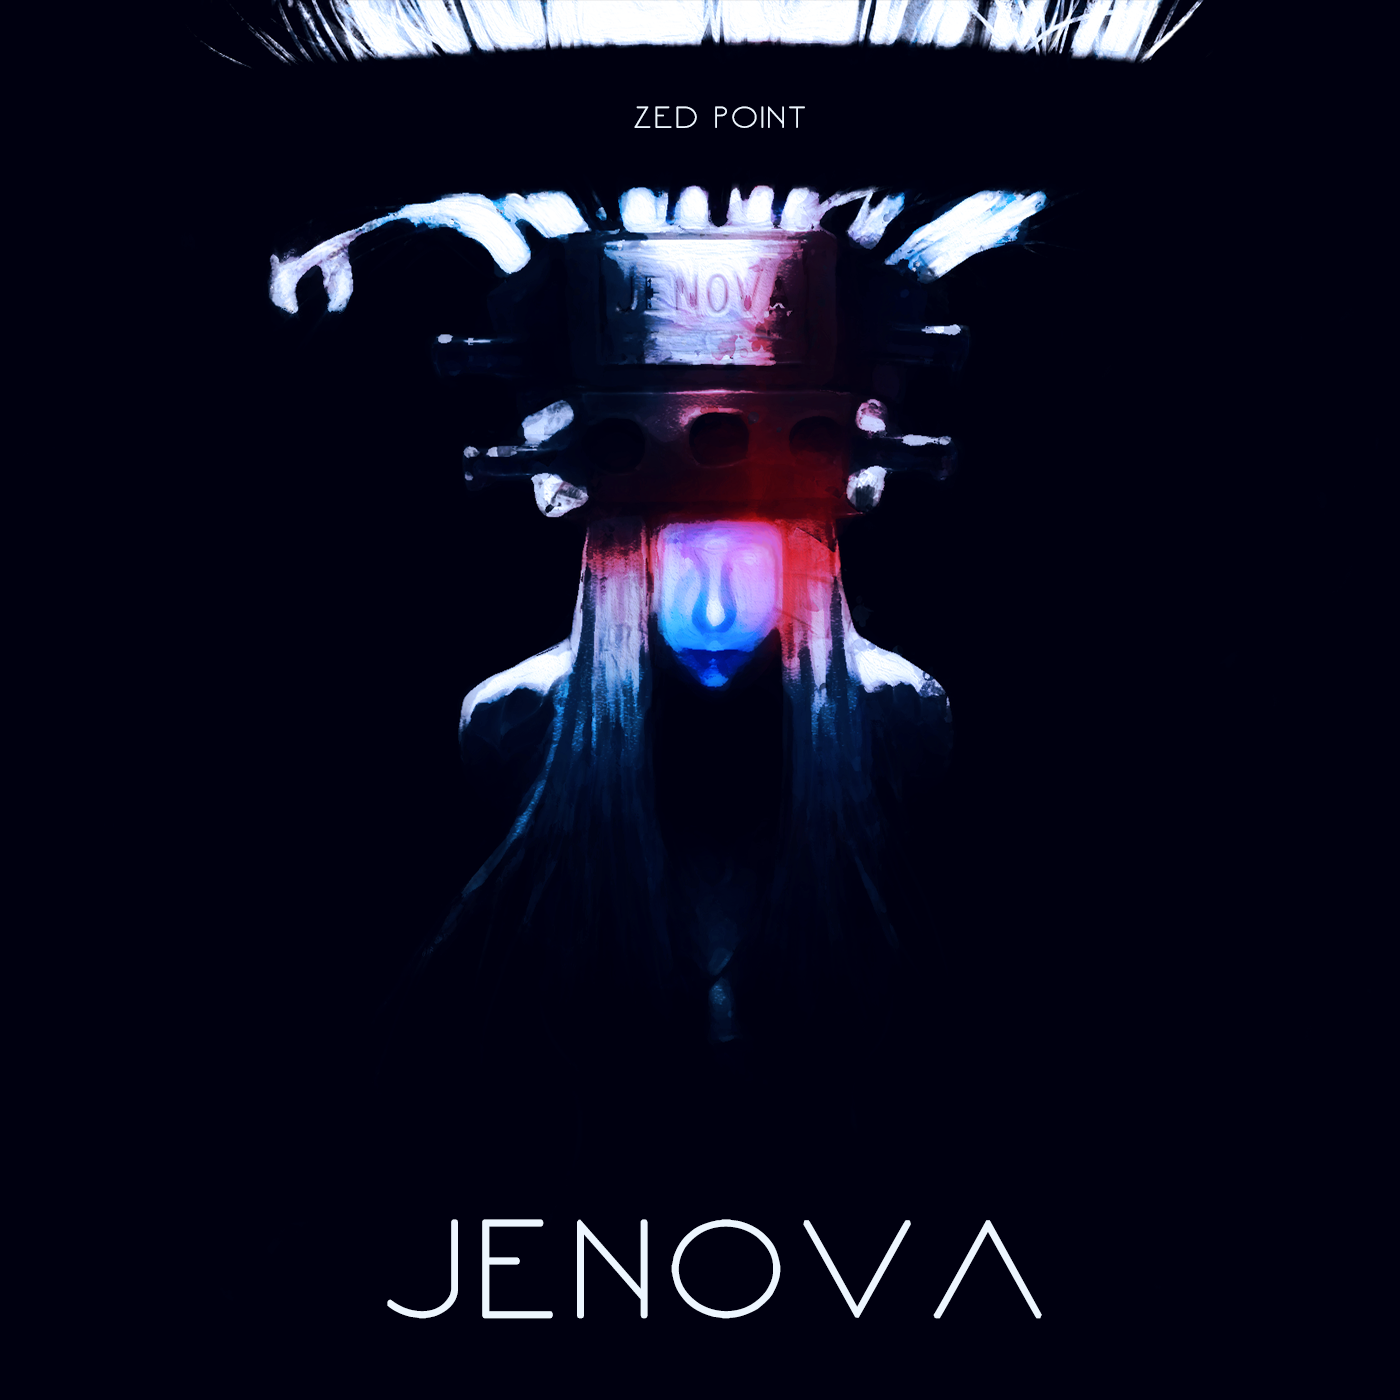 Jenova - single cover concept art